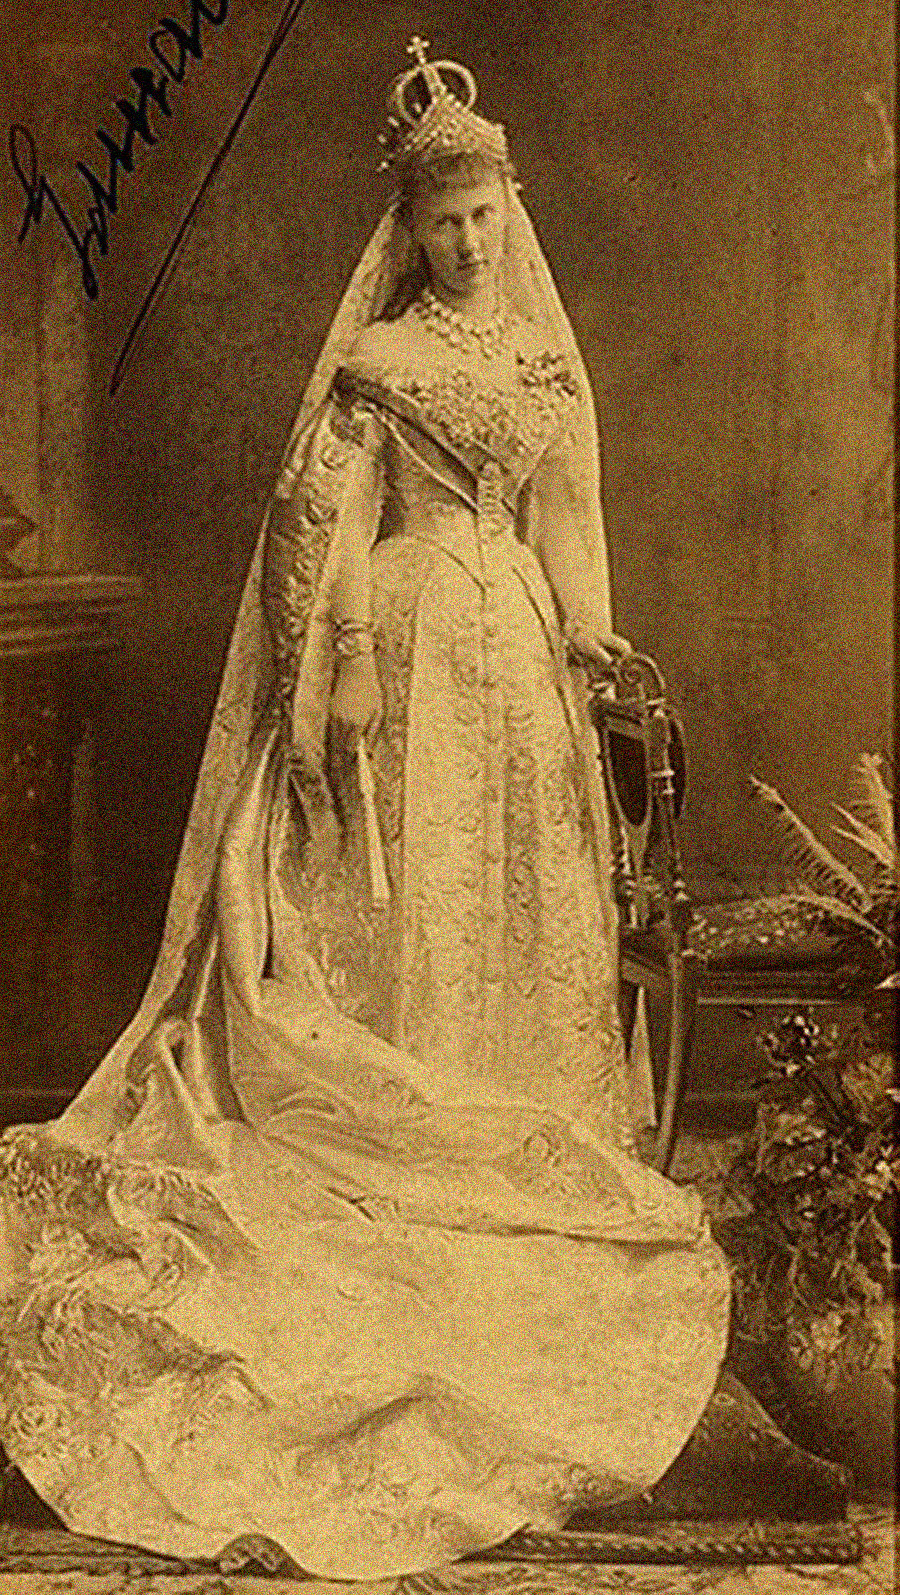  Grand Duchess Elizabeth Mavrikievna, granddaughter of Nicholas I, in the wedding dress, 1884.